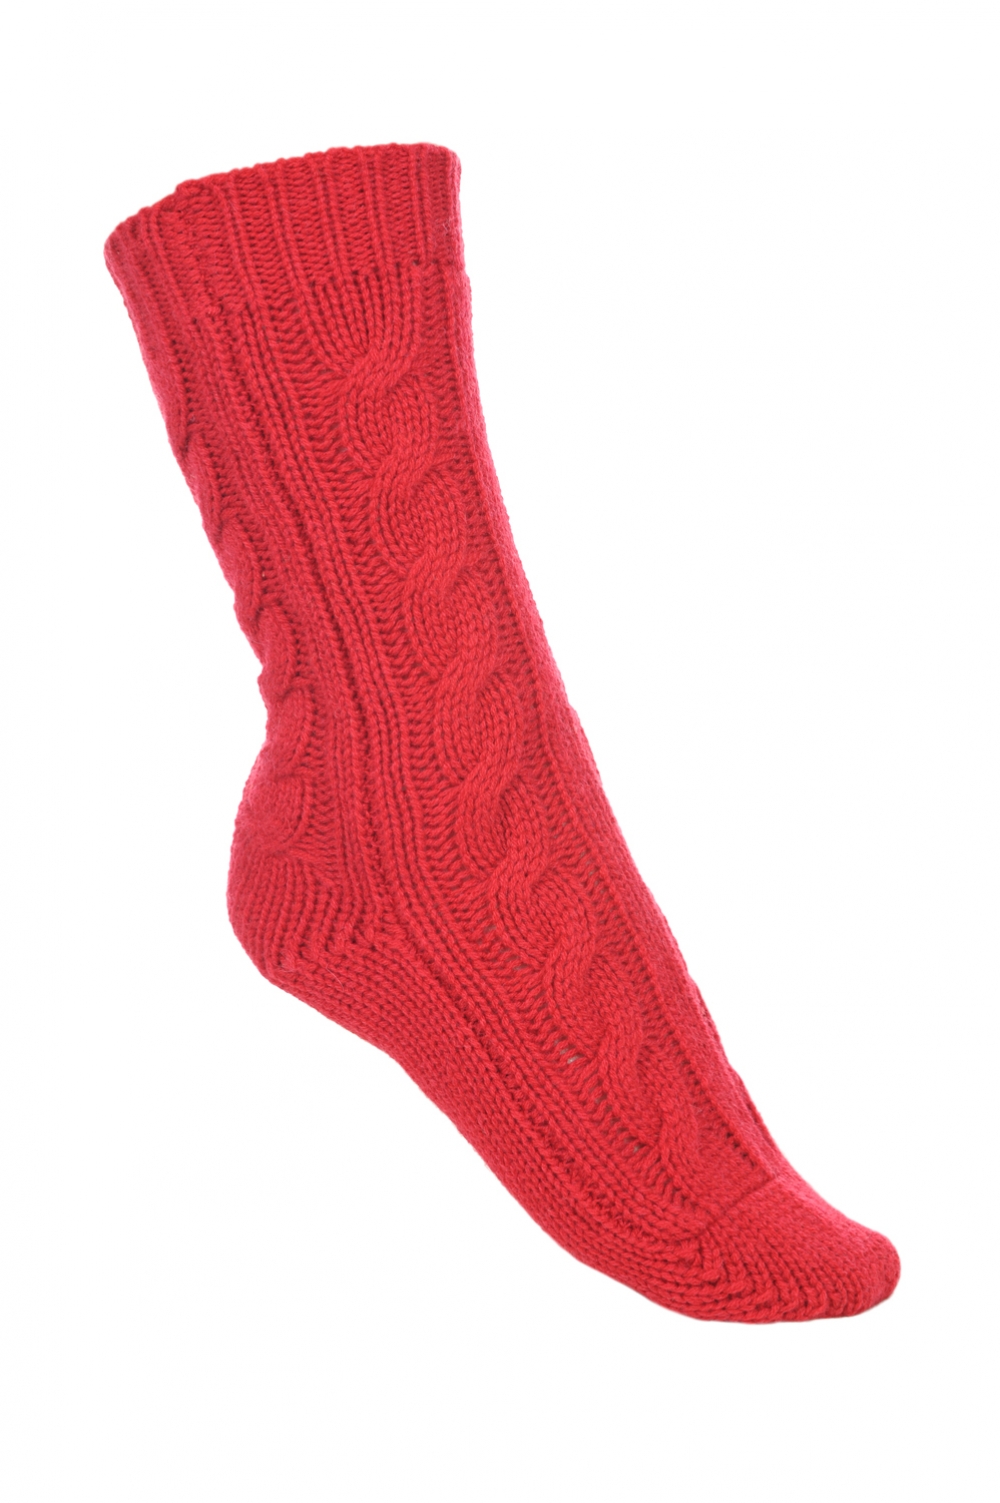 Cashmere accessories socks pedibus blood red 37 41